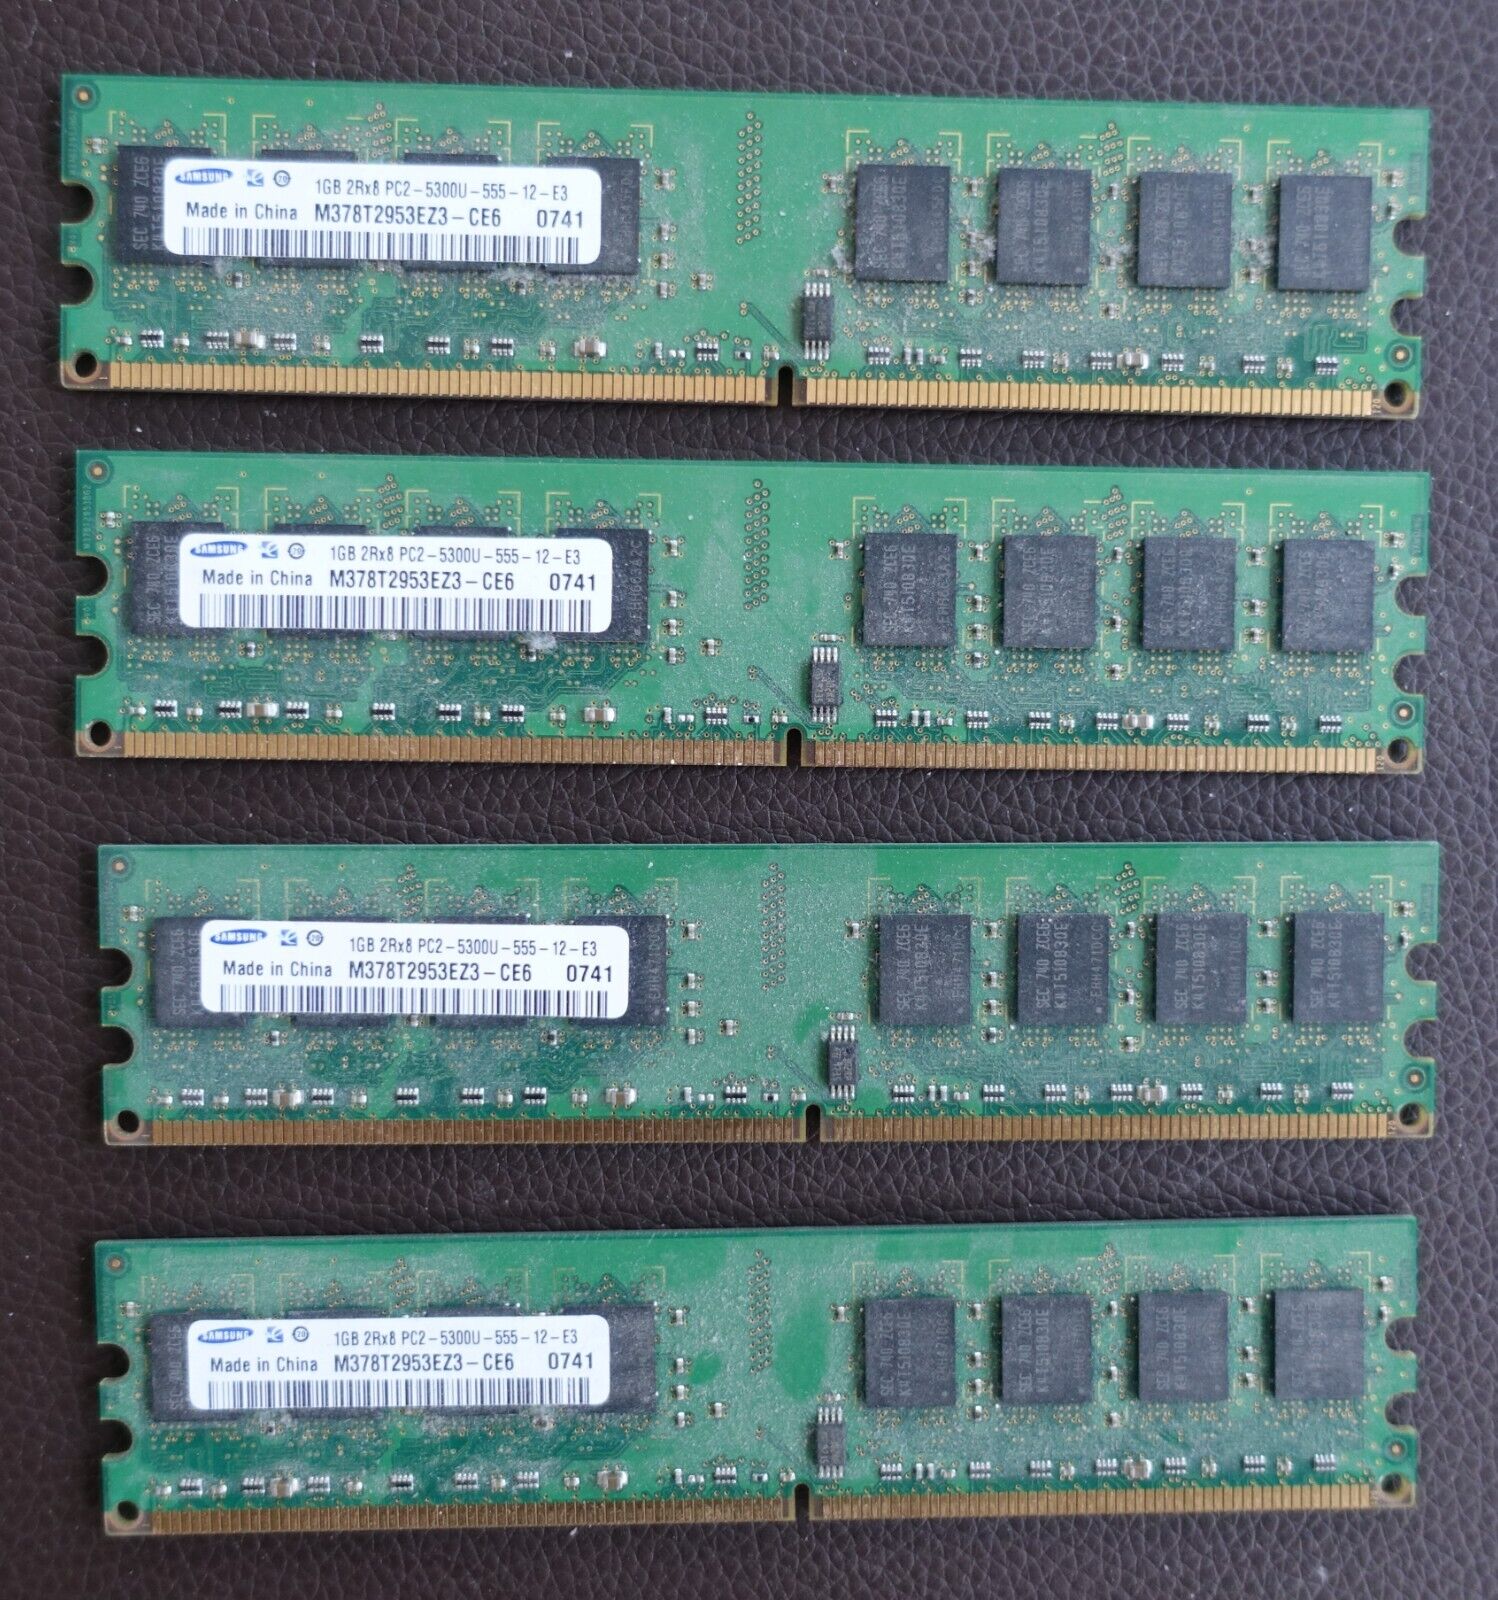 4GB (4 x 1GB) Samsung 2Rx8 PC2-5300U-555-12-E3 DDR2-667MHz SDRAM DIMM